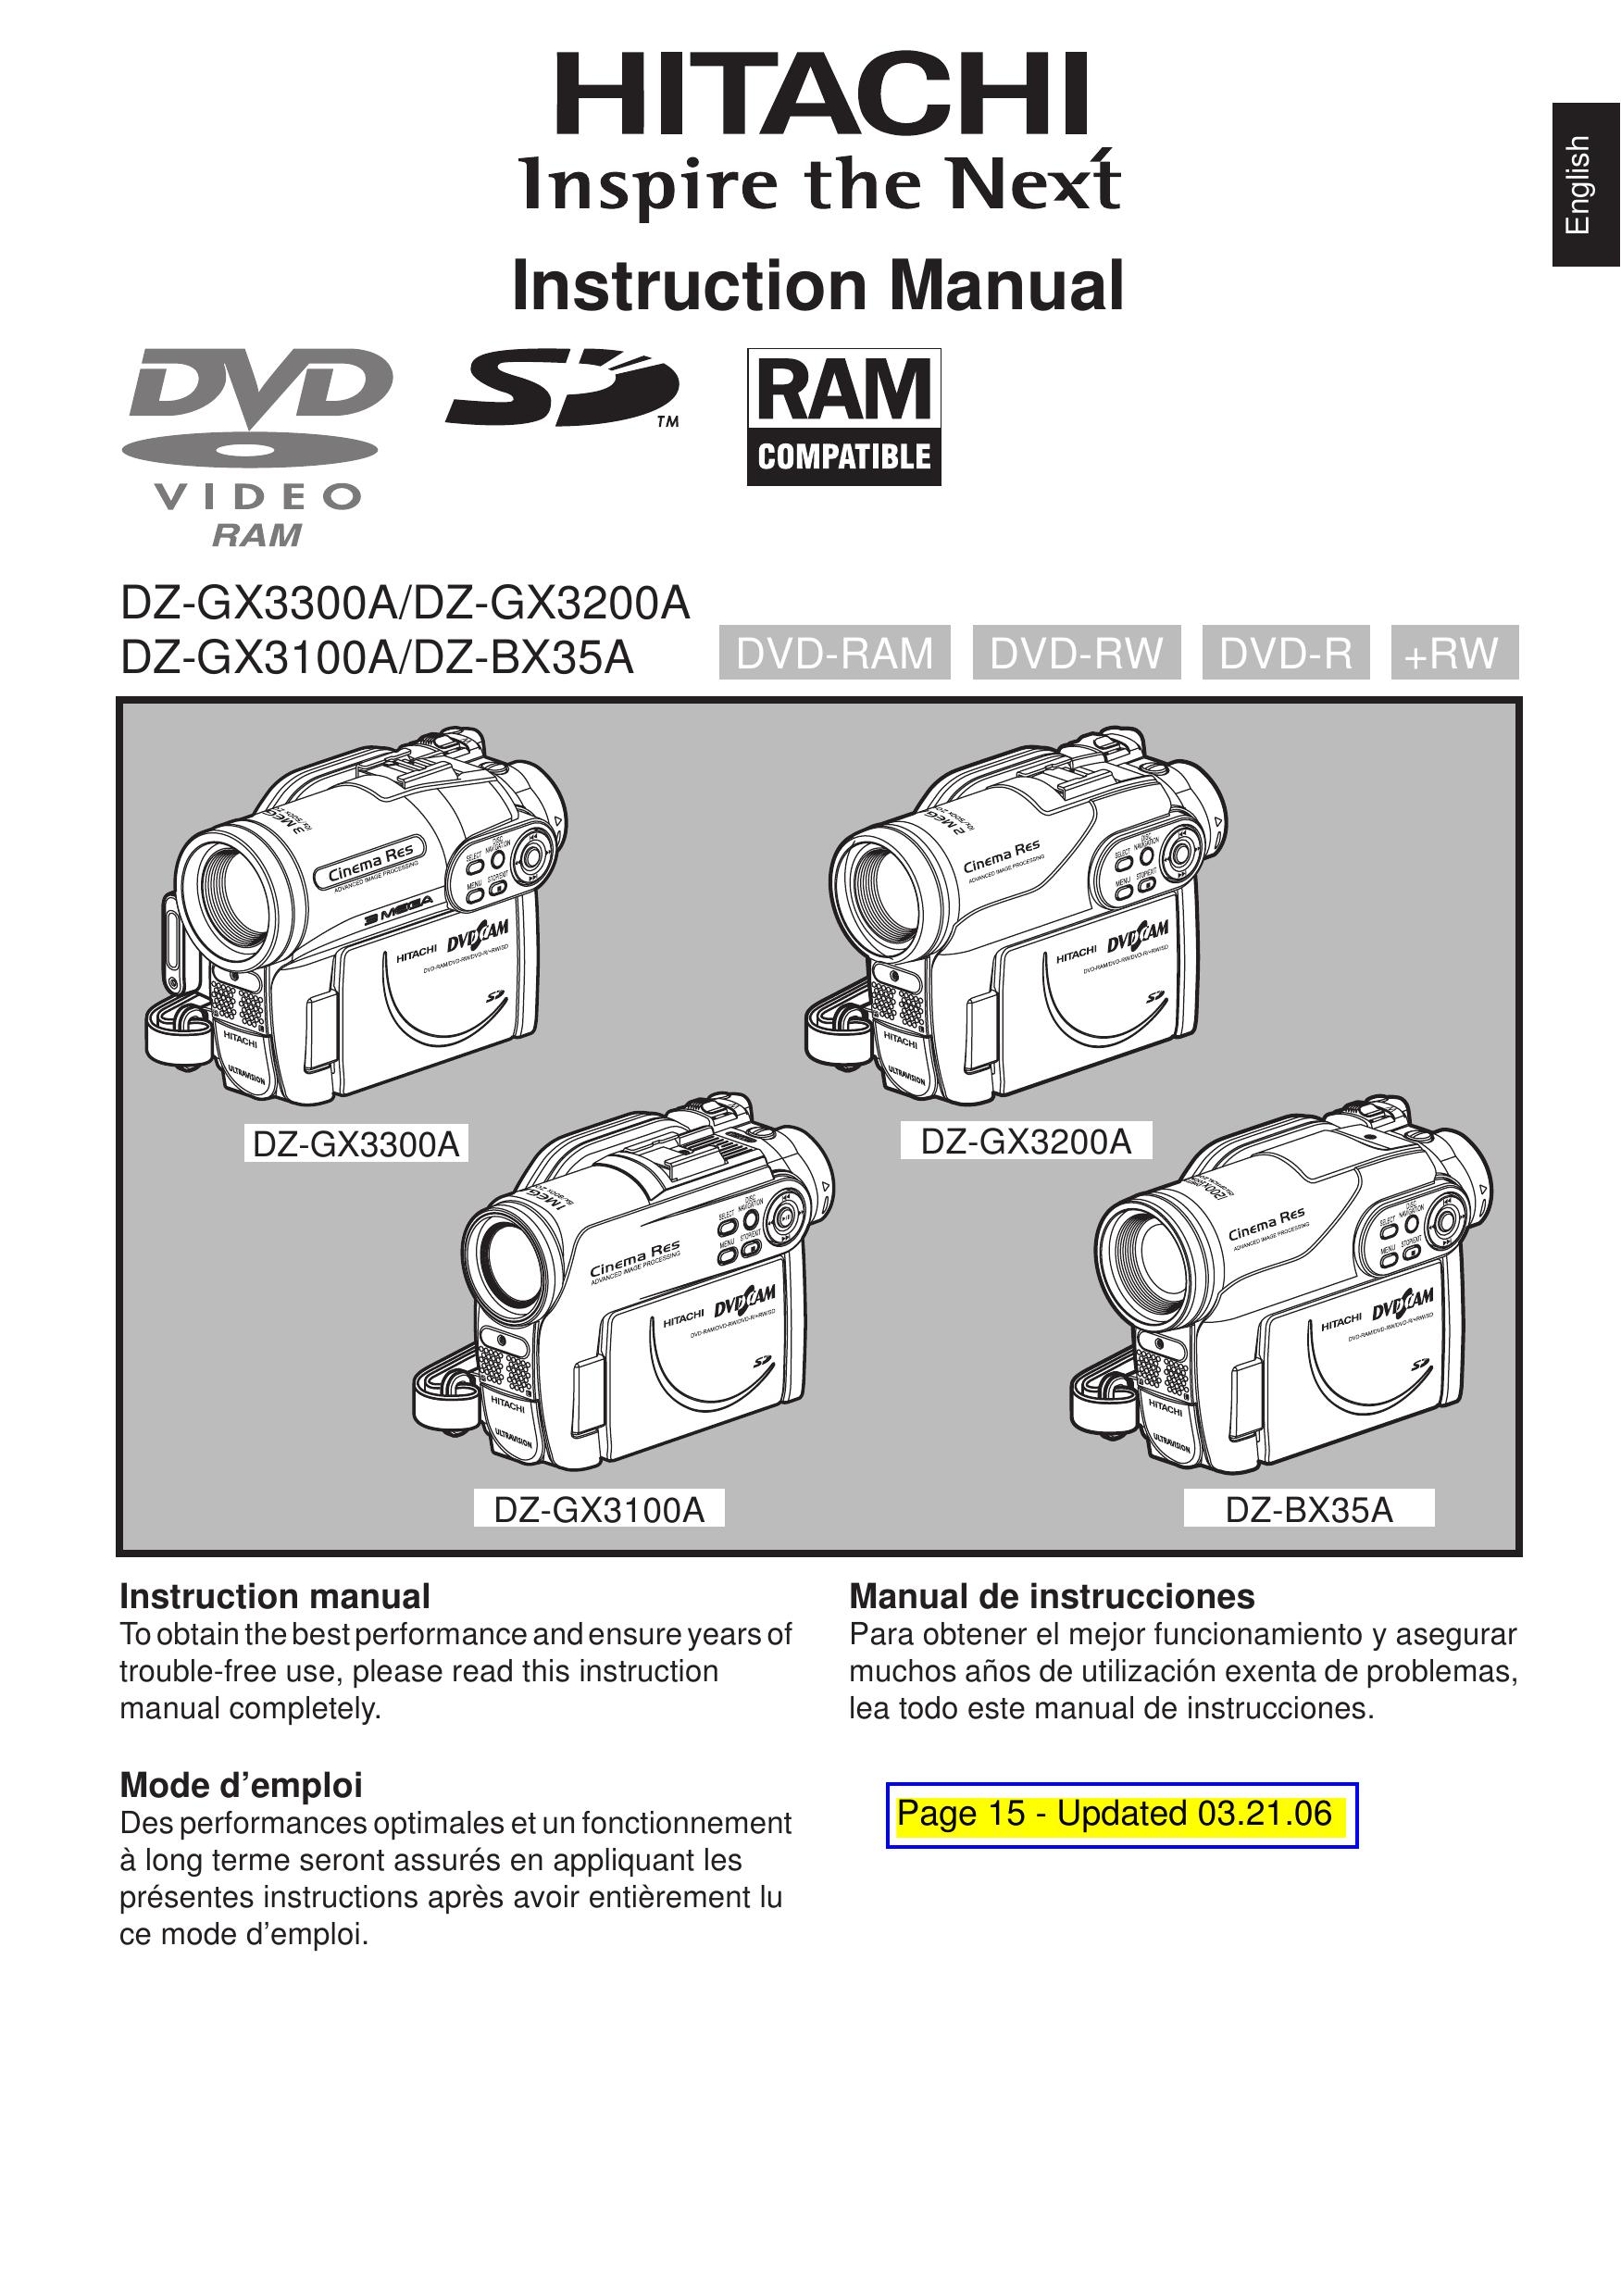 Hitachi DZ-GX3100A Camcorder User Manual